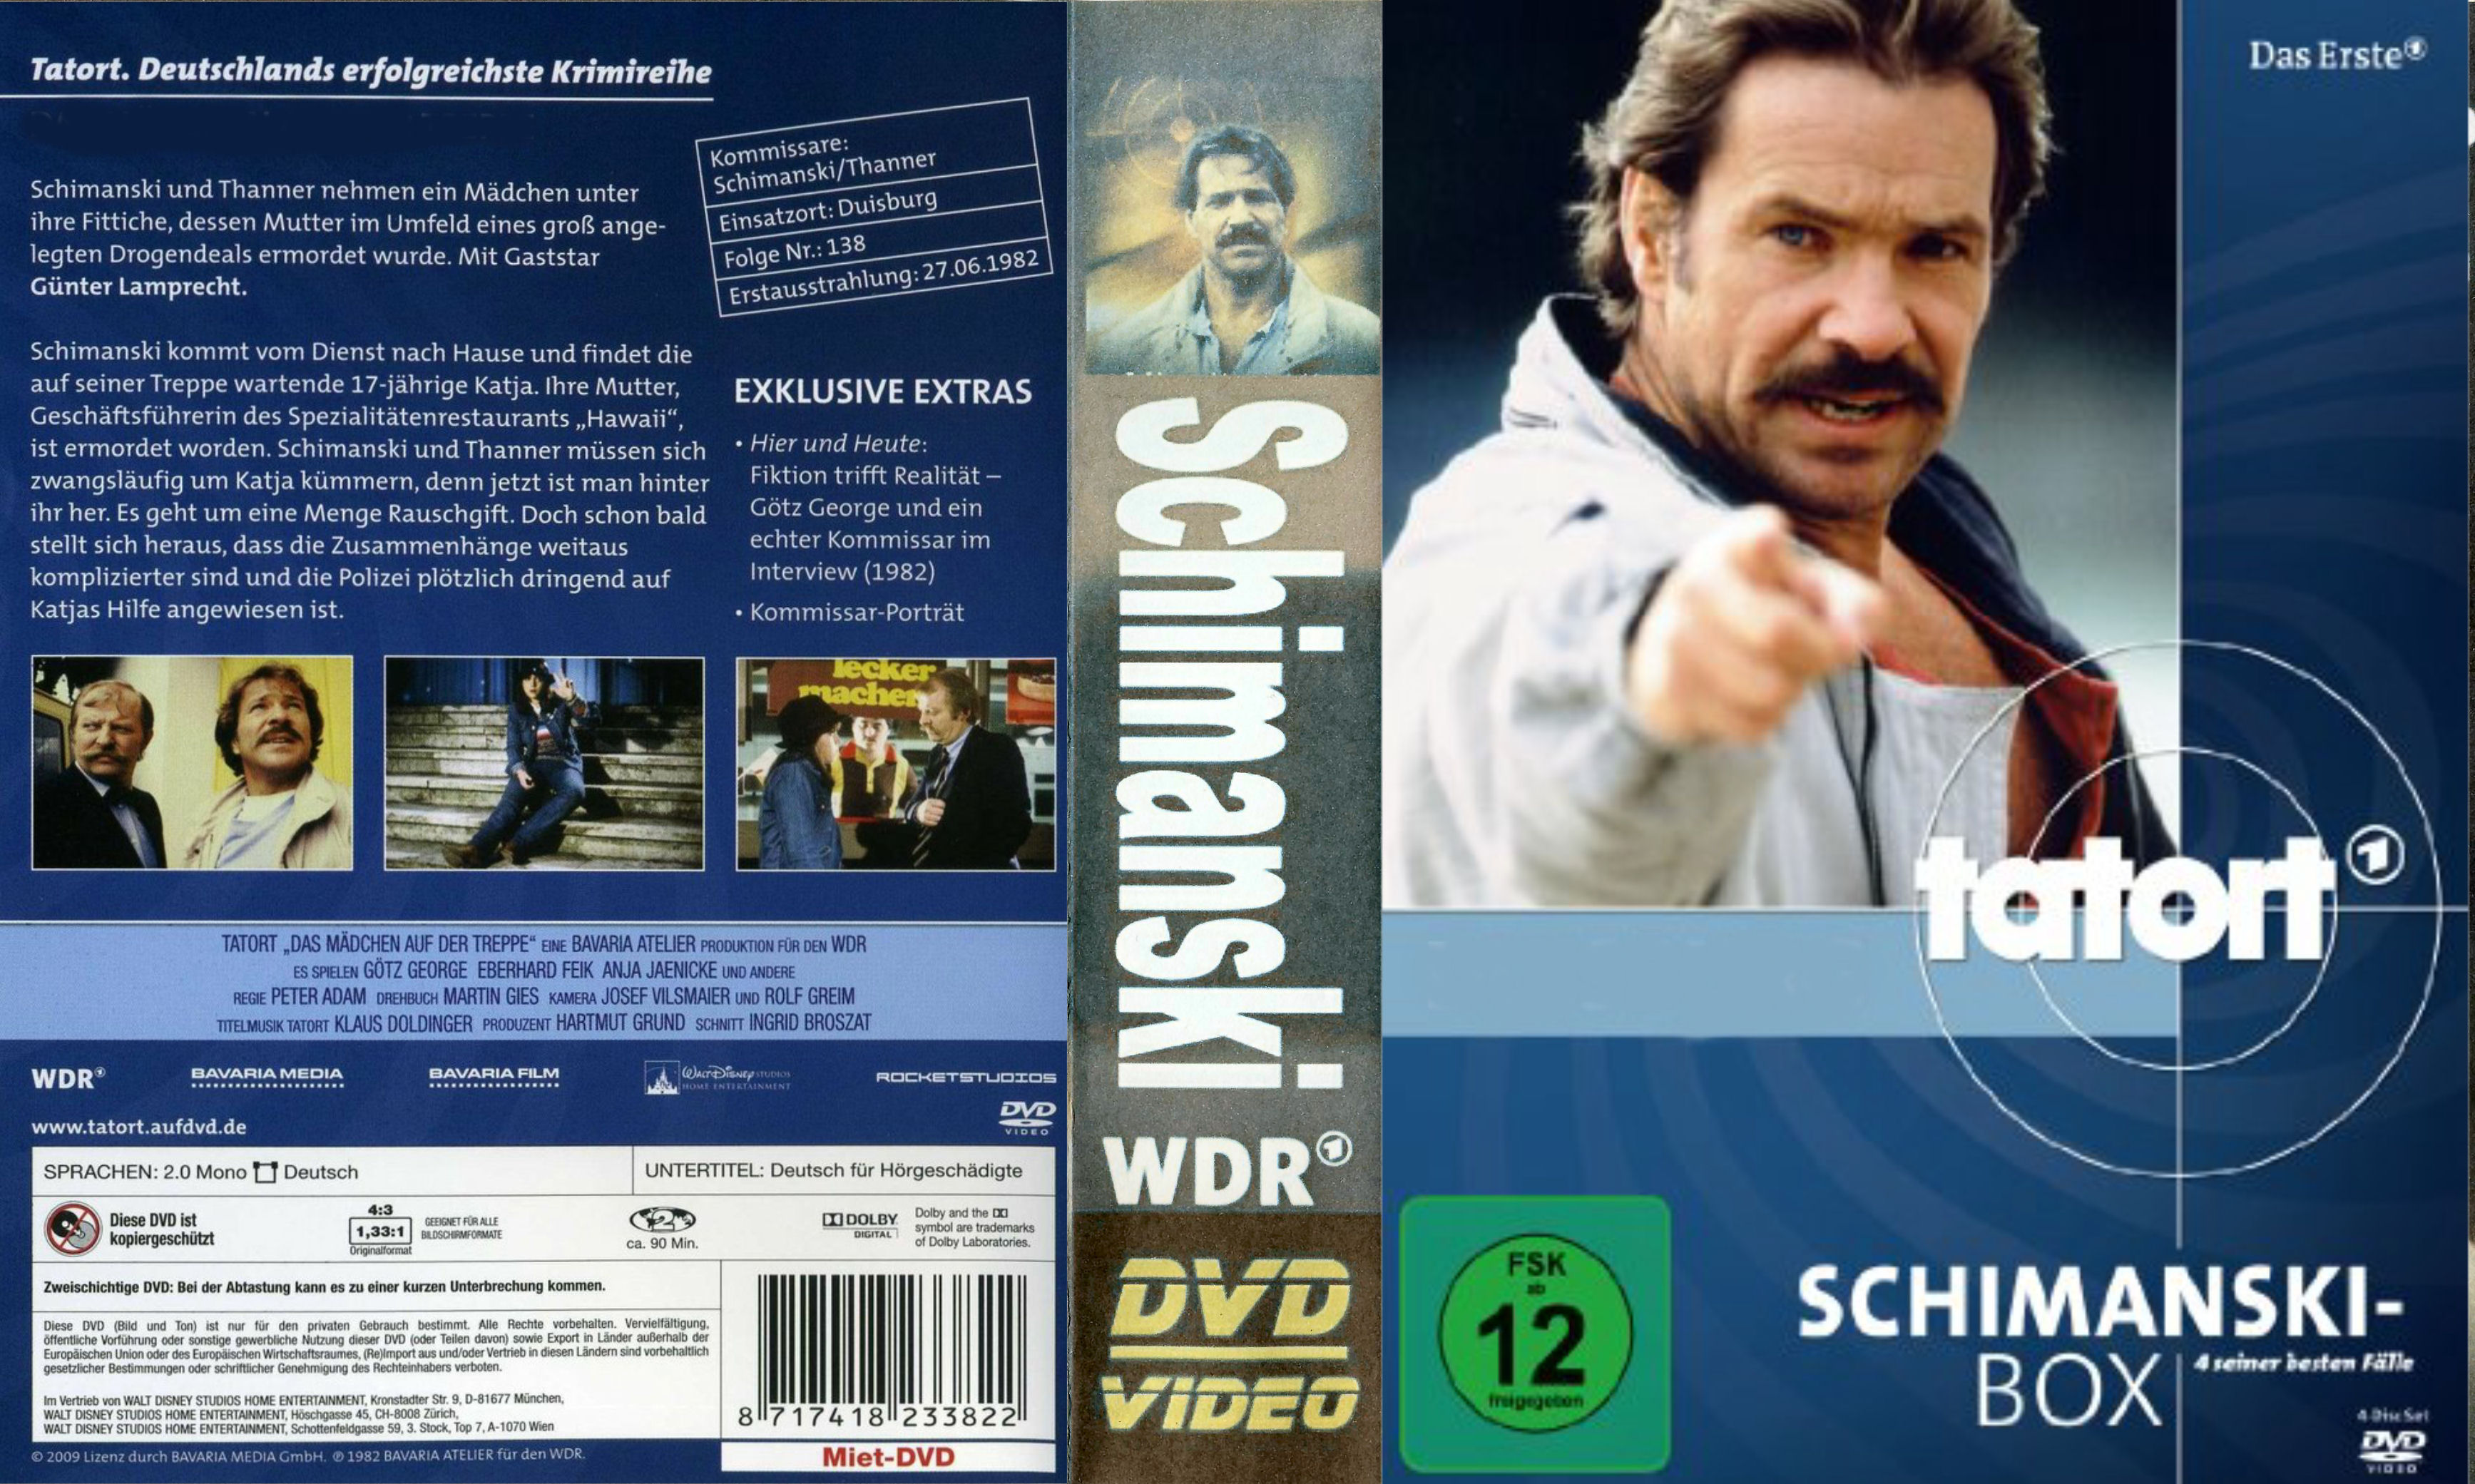 Schimanski Collectie Tatort No Subs - DvD 23